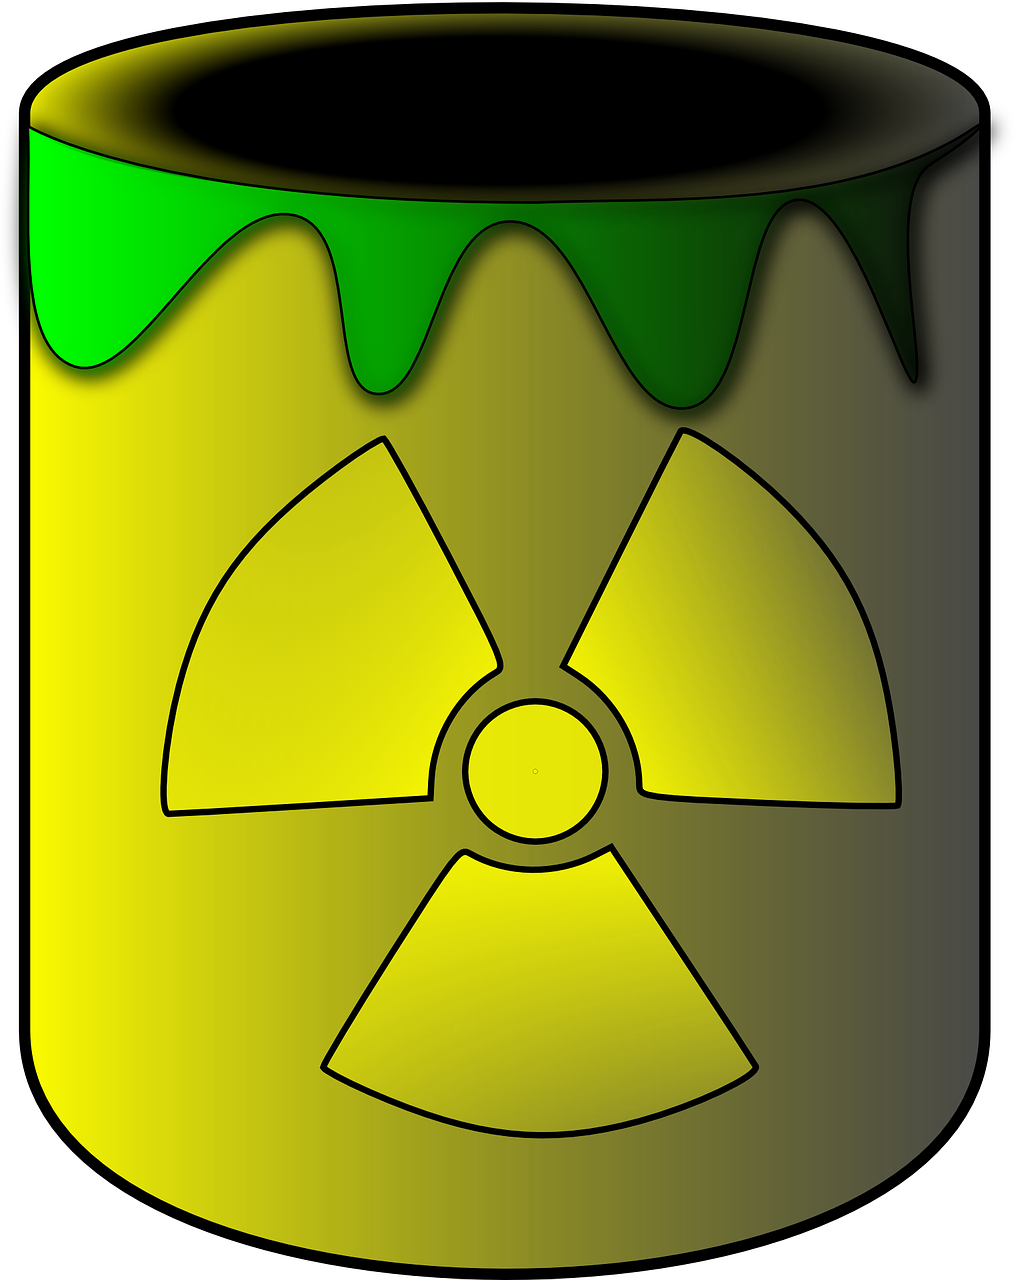 Toxic,dump,radioactive,cup,poison - free image from needpix.com